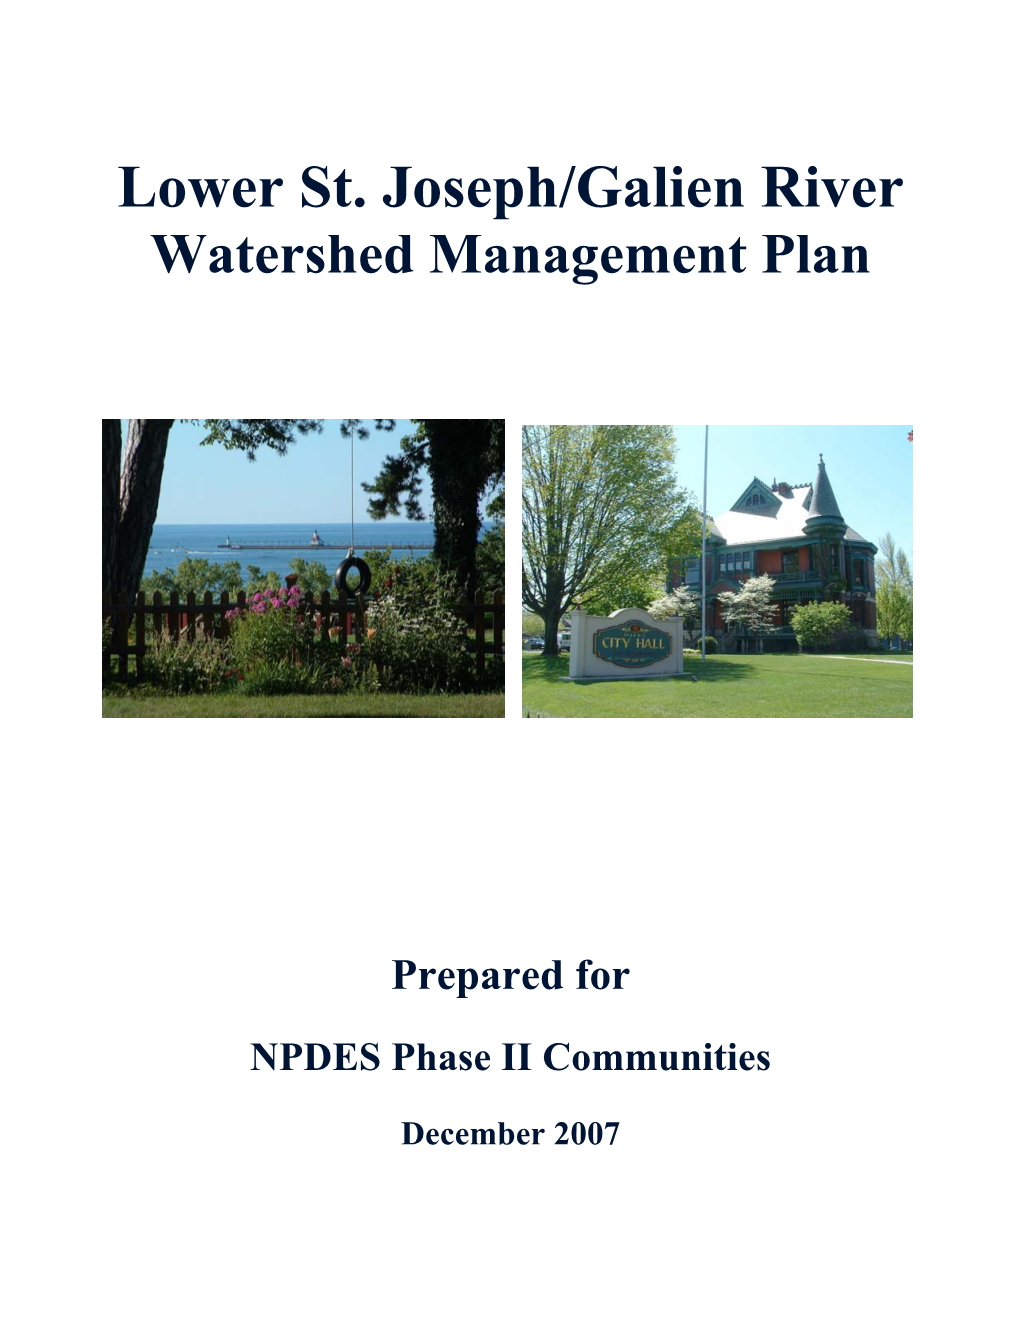 Lower St. Joseph/Galien River Watershed Management Plan